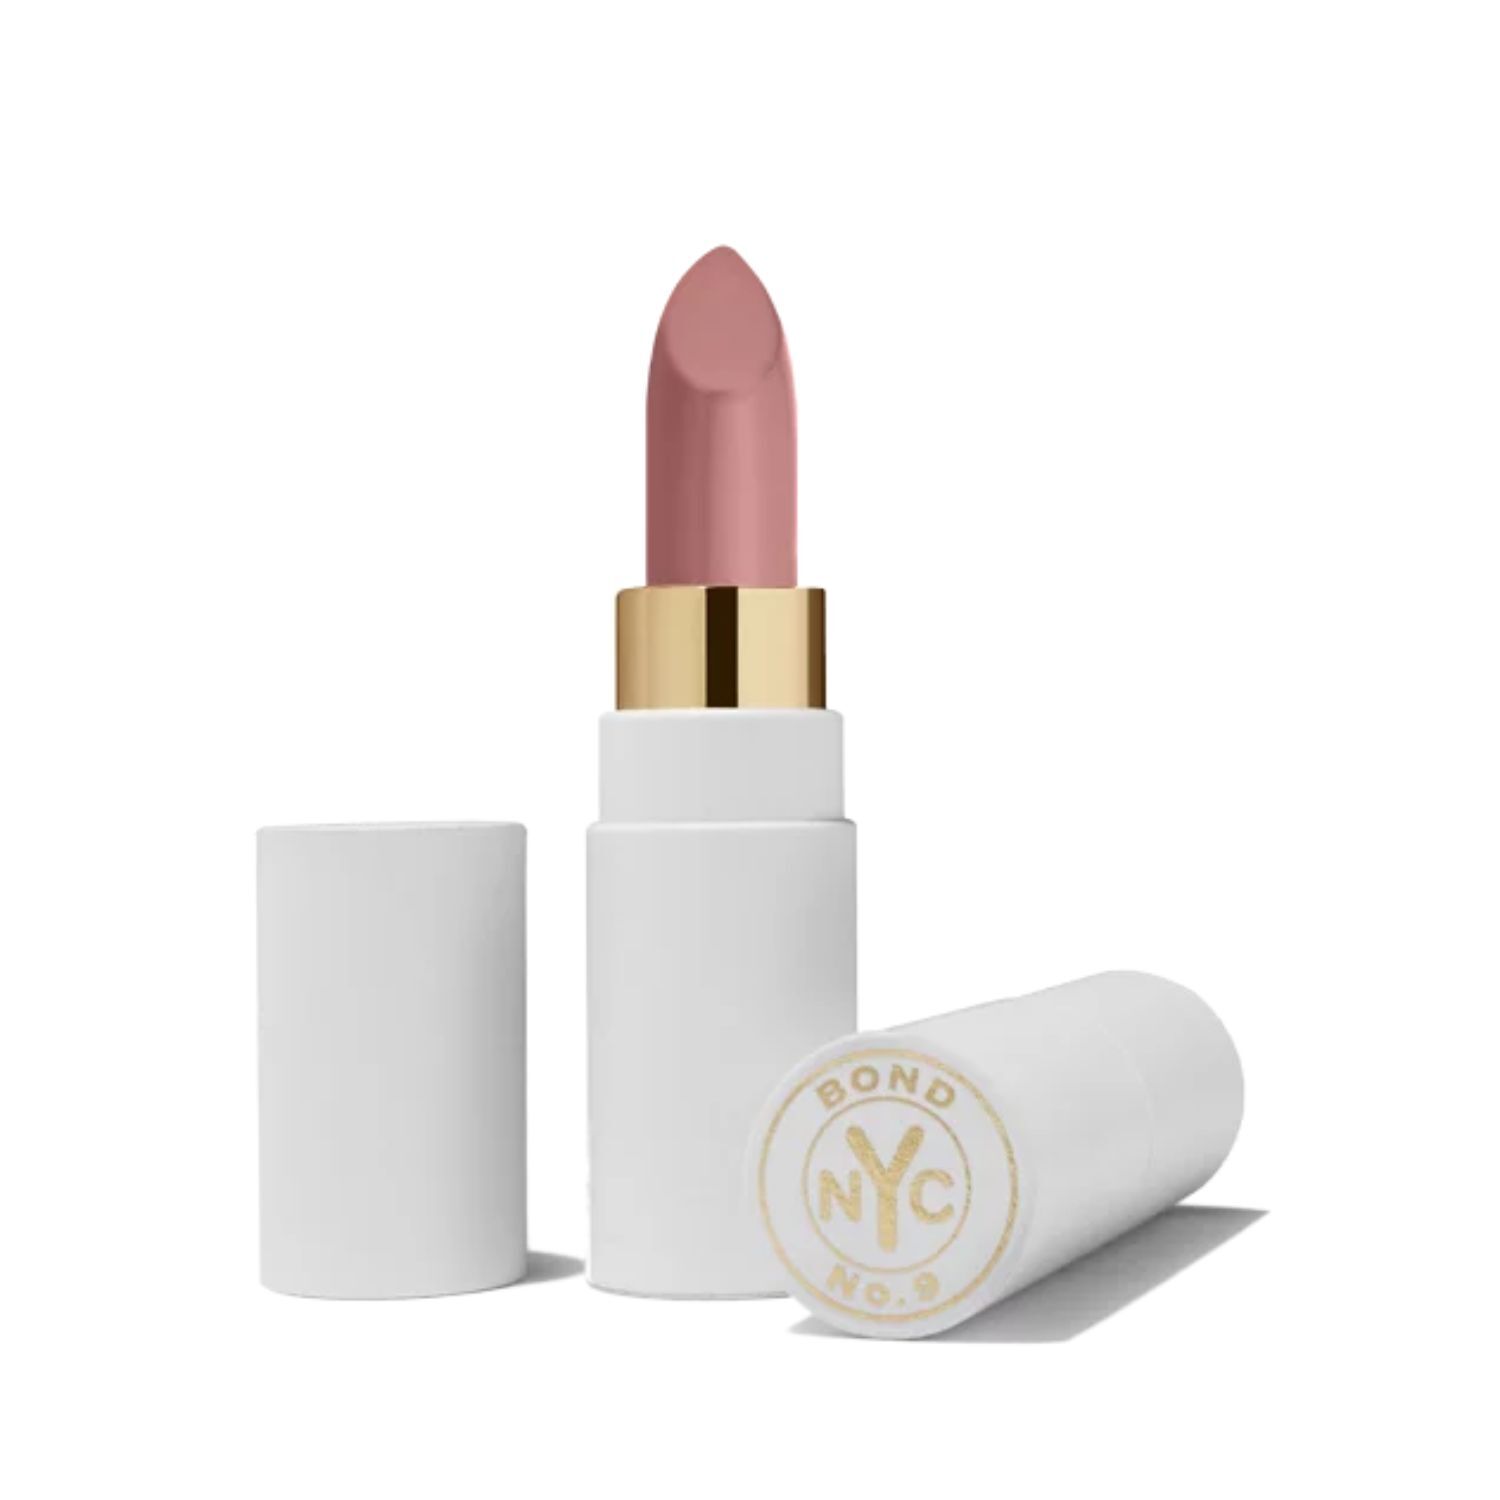 Bond No.9 Hudson Yards Lipstick Refill